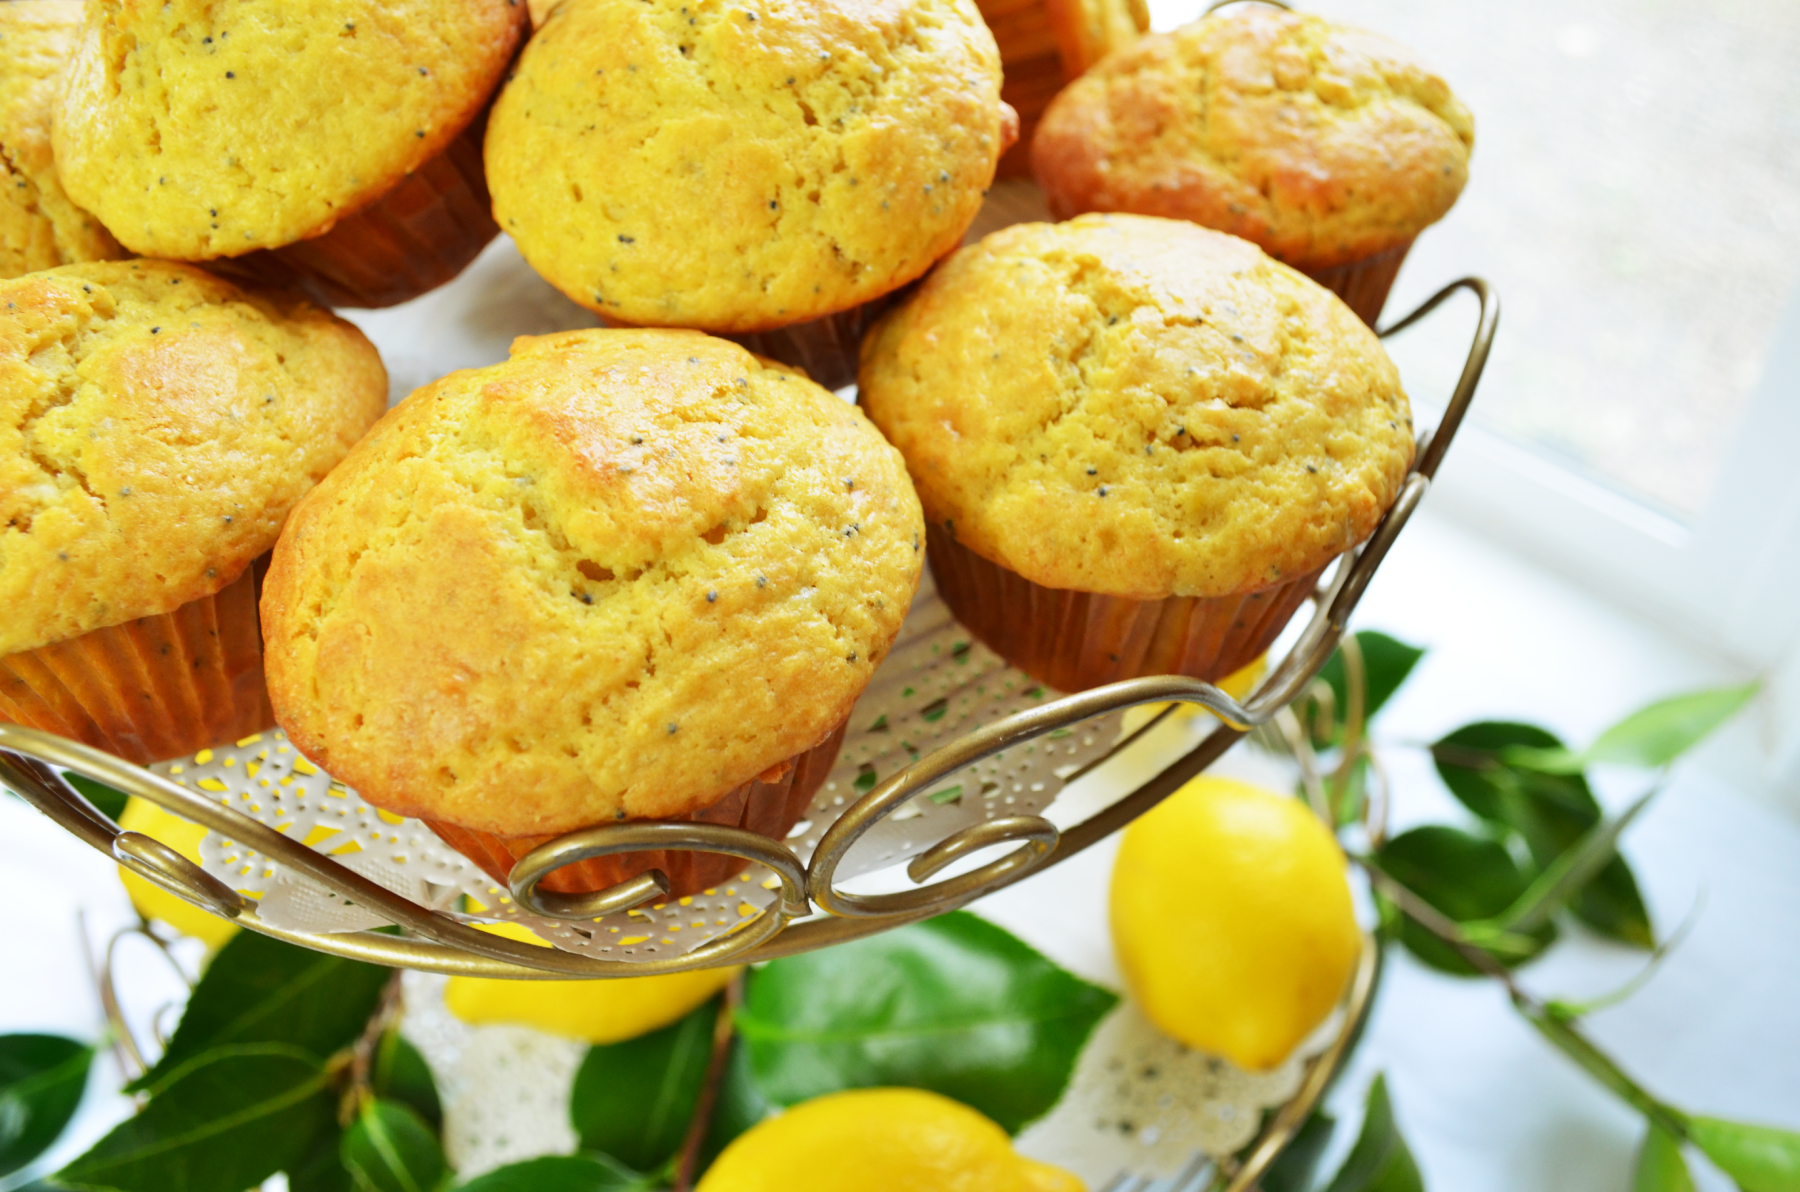 lemon poppy seed muffins displayed alongside bright yellow lemons